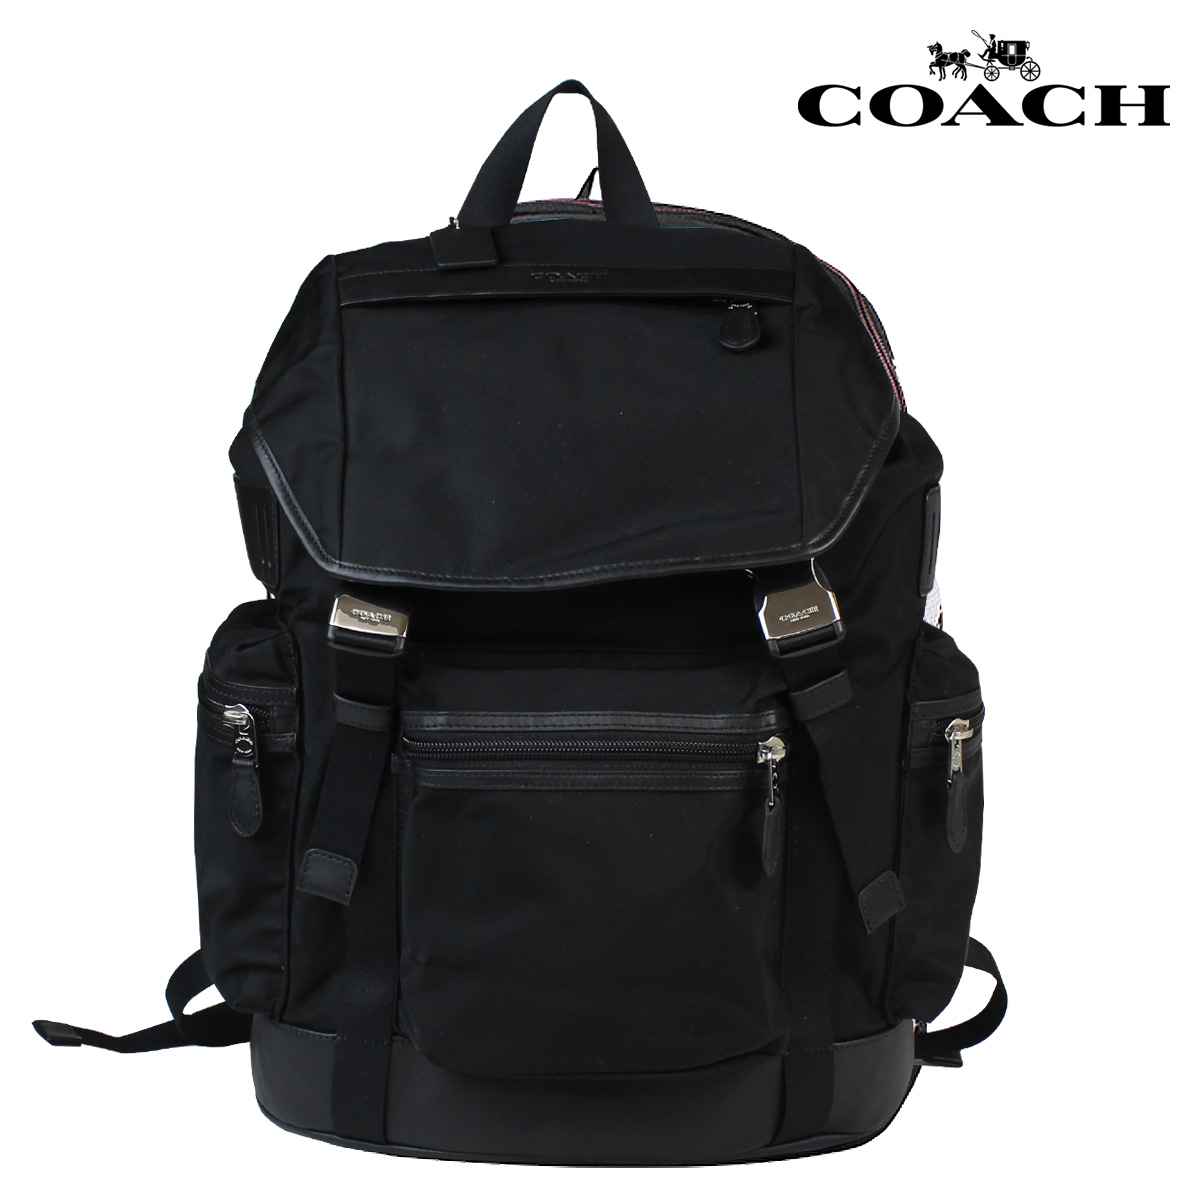 ALLSPORTS: Coach COACH mens rucksack backpack F71884 black nylon Trek Pack | Rakuten Global Market